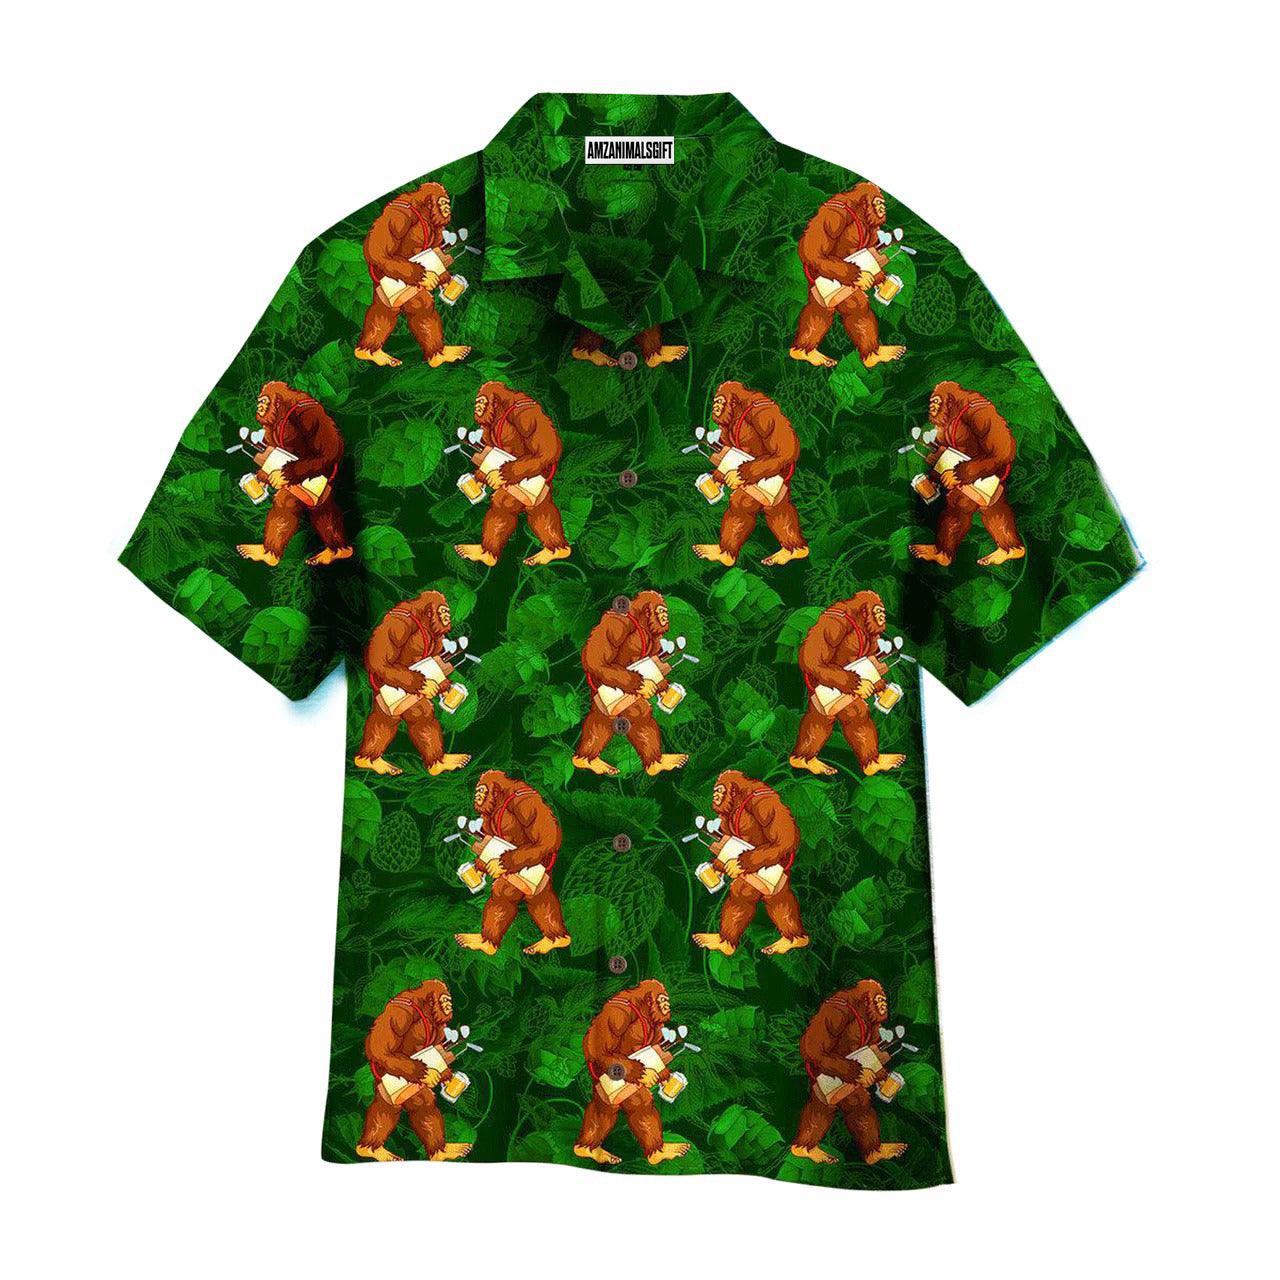 Golf Hawaiian Shirt, Bigfoot Love Golf And Beer Leaves Pattern Green Aloha Hawaiian Shirts For Men and Women - Gift For Golfer, Friend, Family - Amzanimalsgift